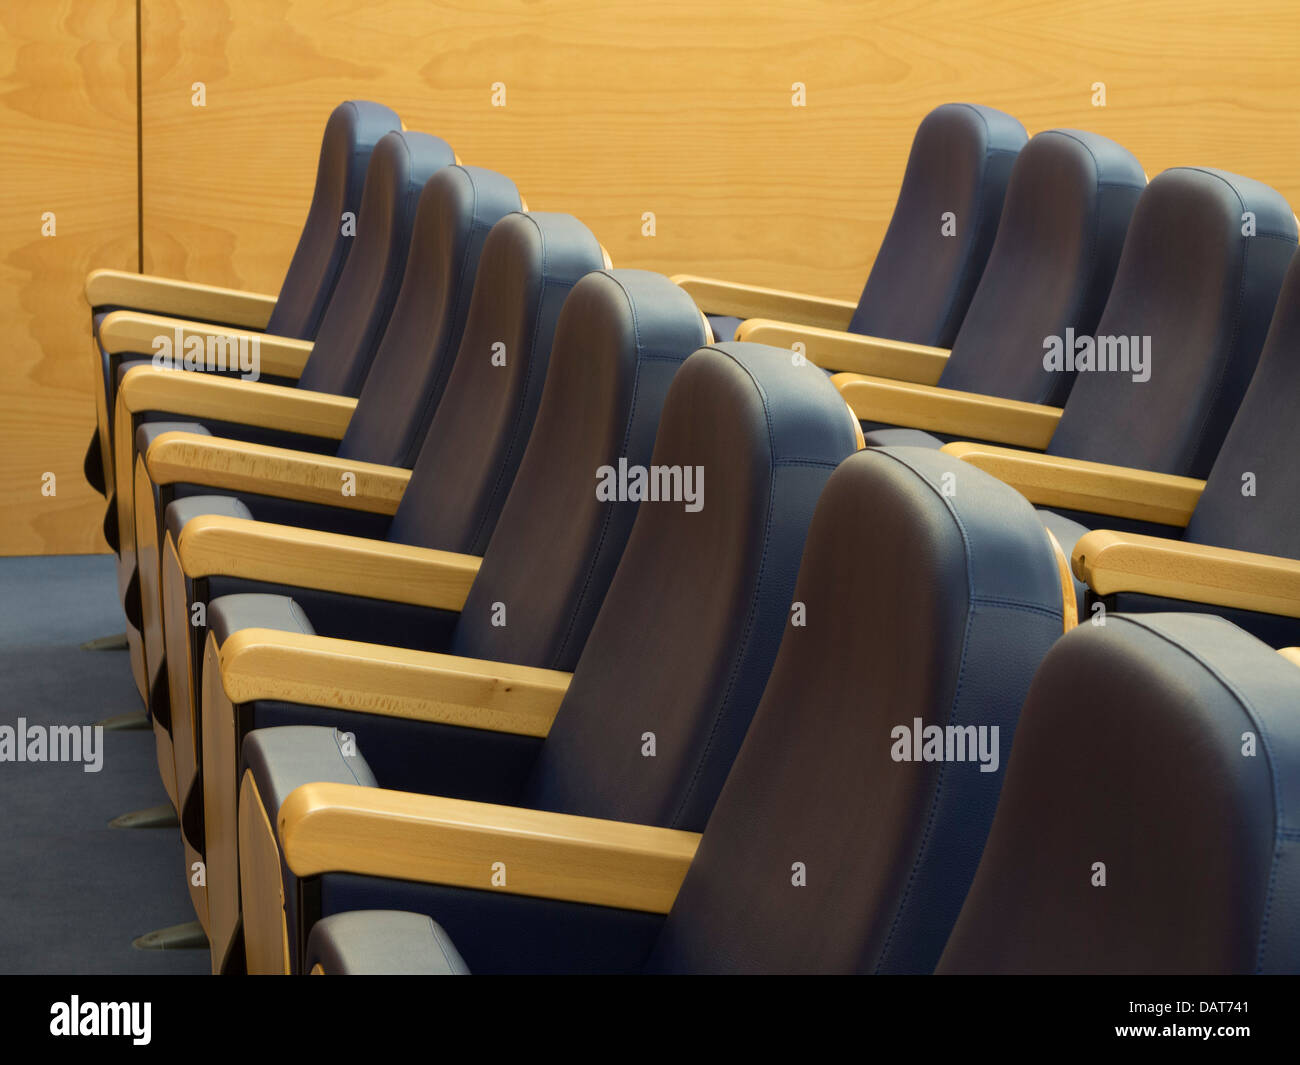 Rows of empty seats Stock Photo